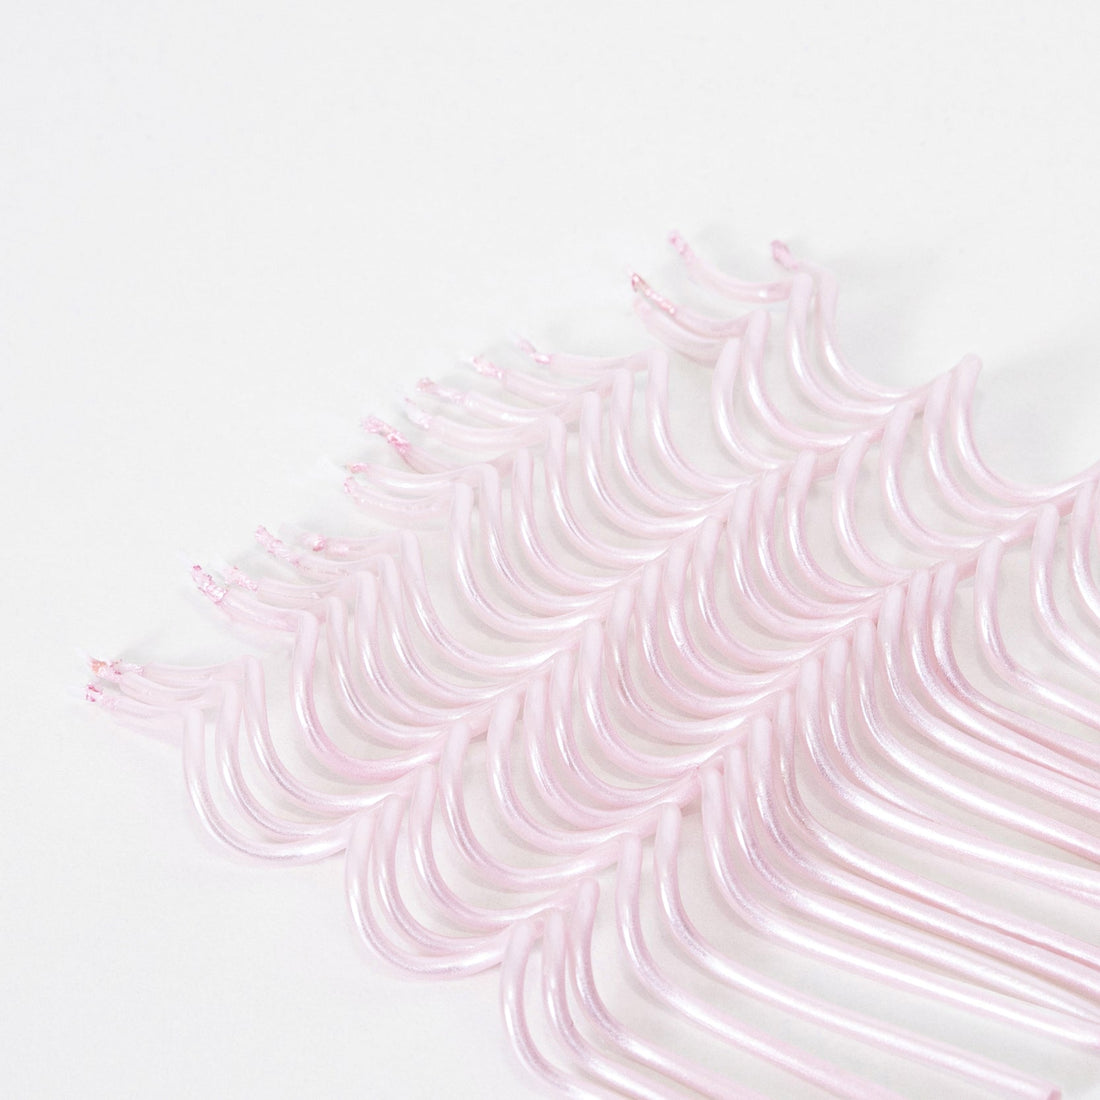 A pack of 20 Meri Meri Pink Swirly Candles.